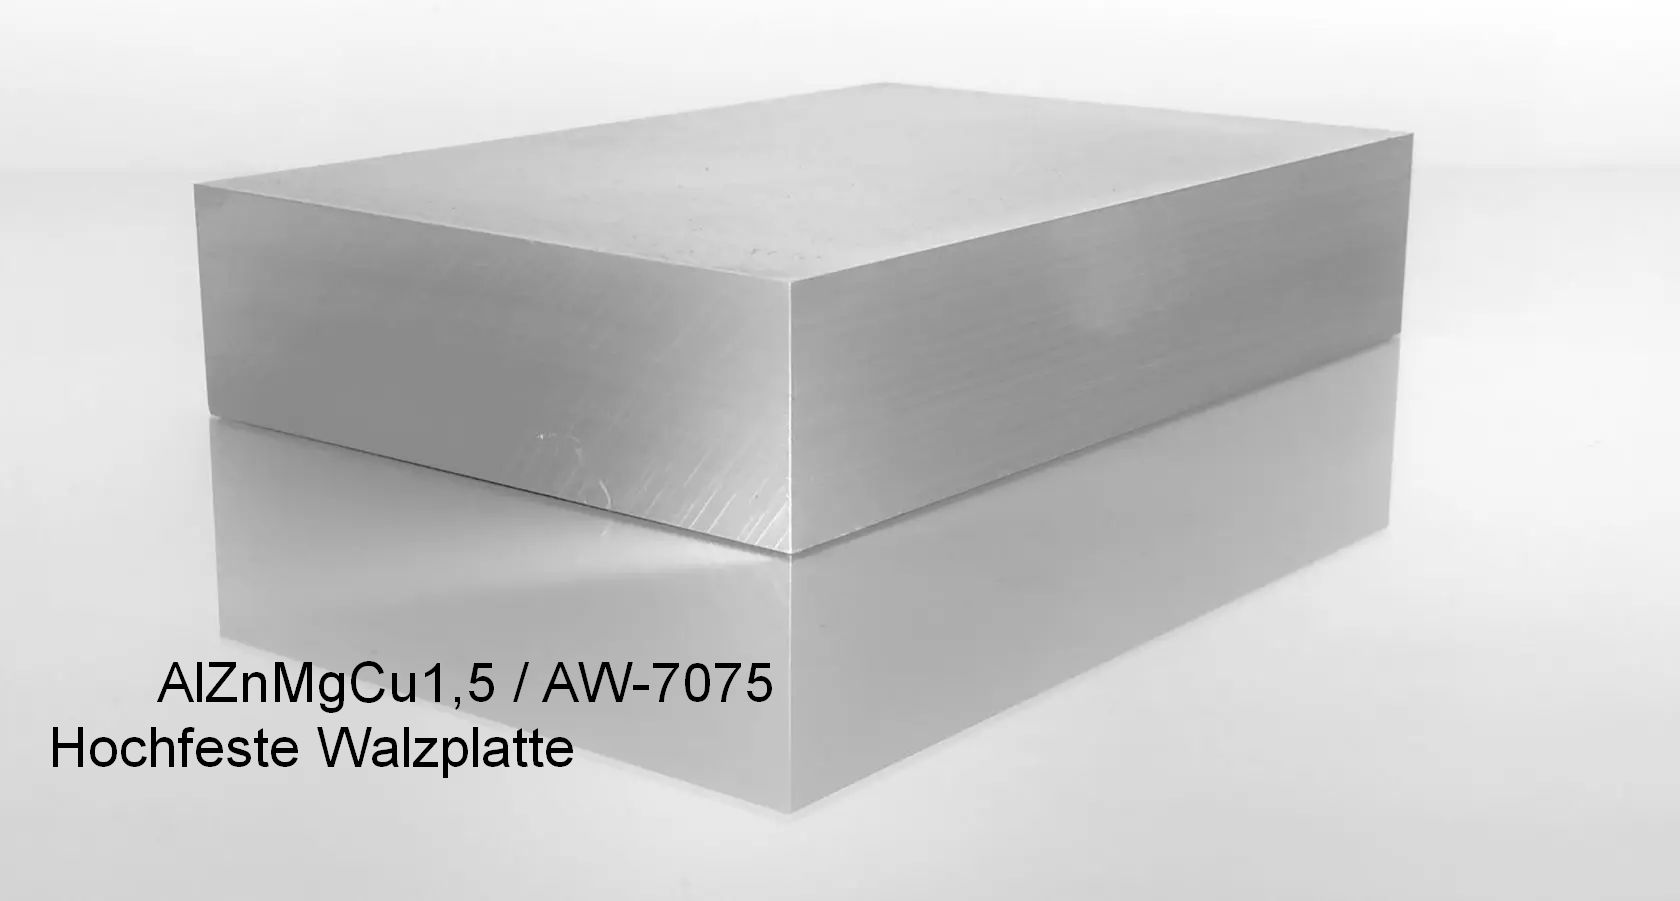 Aluminium Platte AlZnMgCu1,5 Walzplatte hochfest